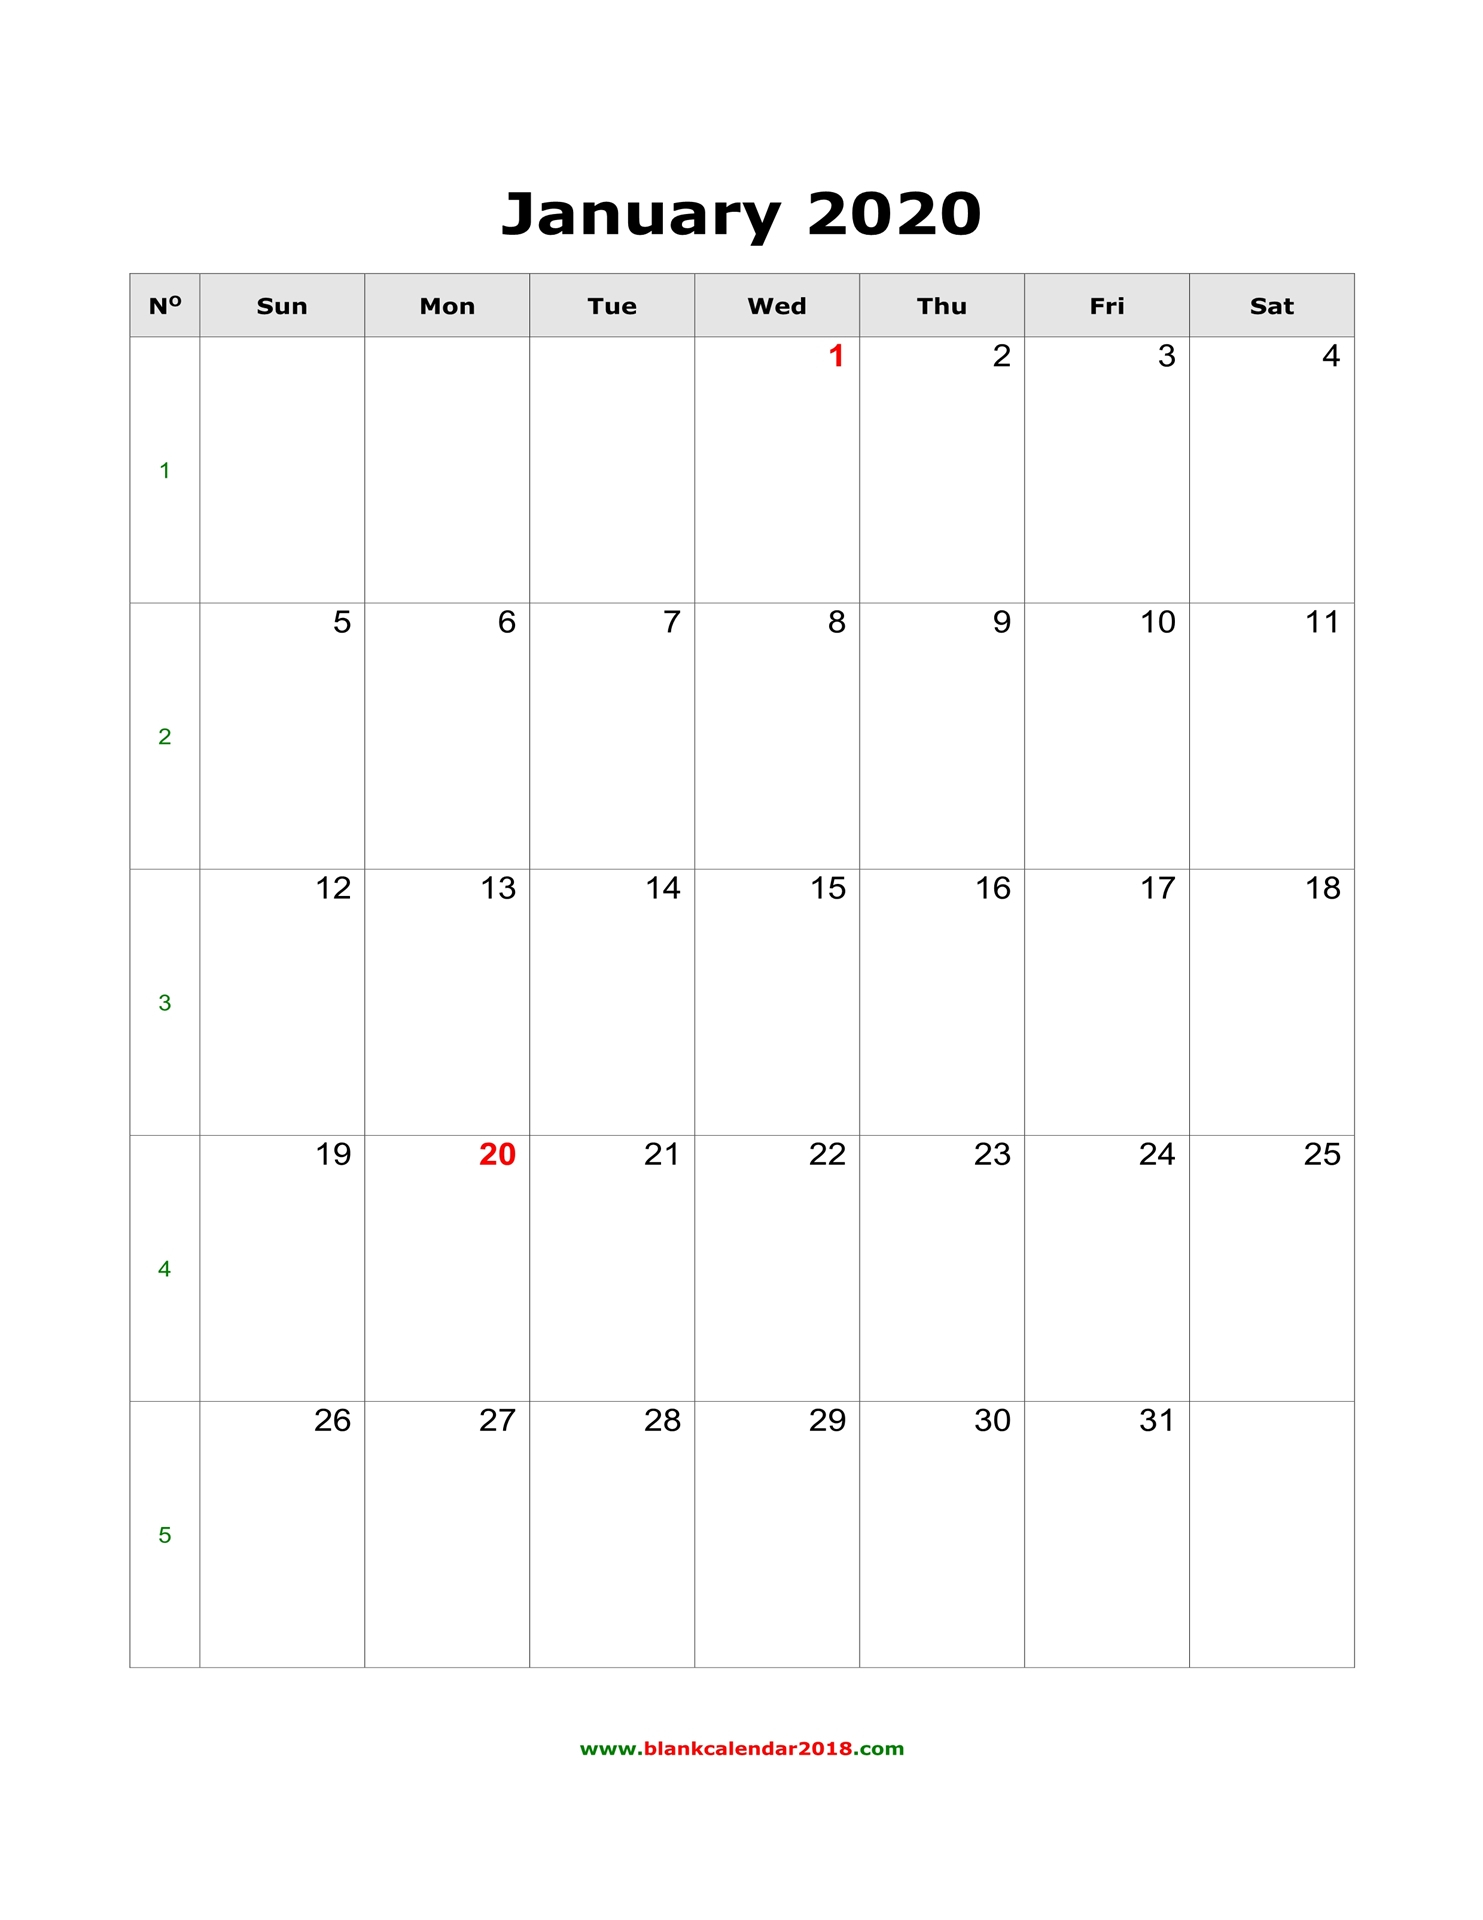 January Blank Calendar 2020 - Togo.wpart.co